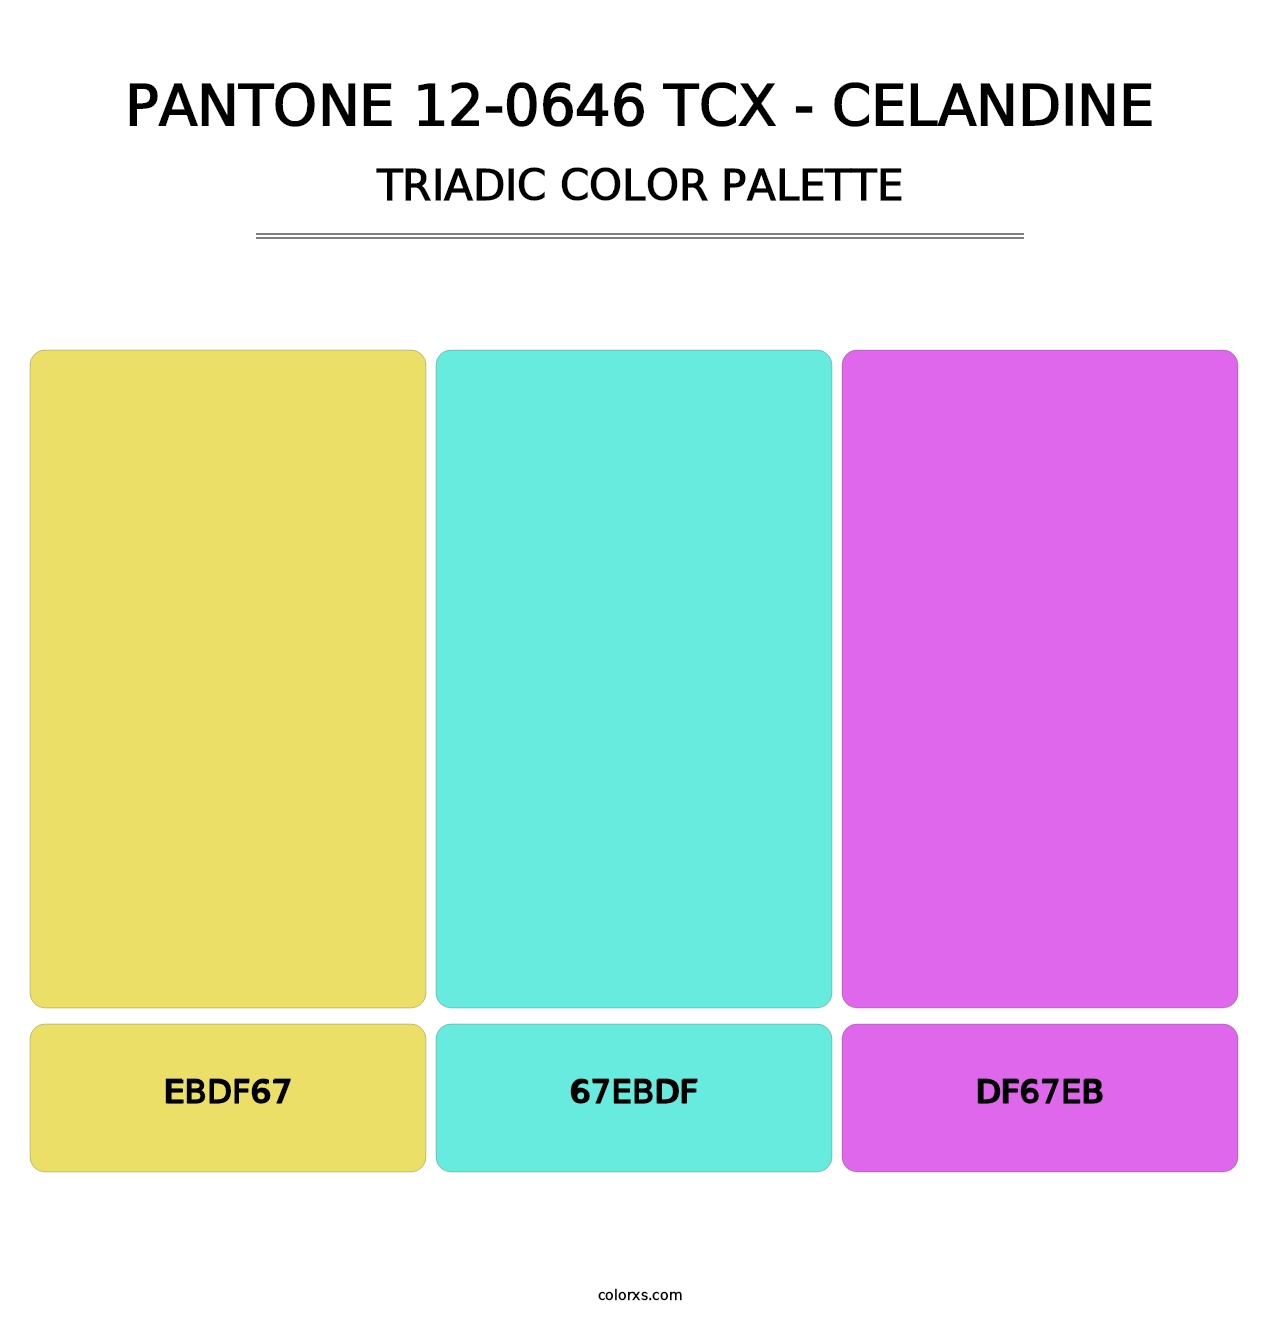 PANTONE 12-0646 TCX - Celandine - Triadic Color Palette